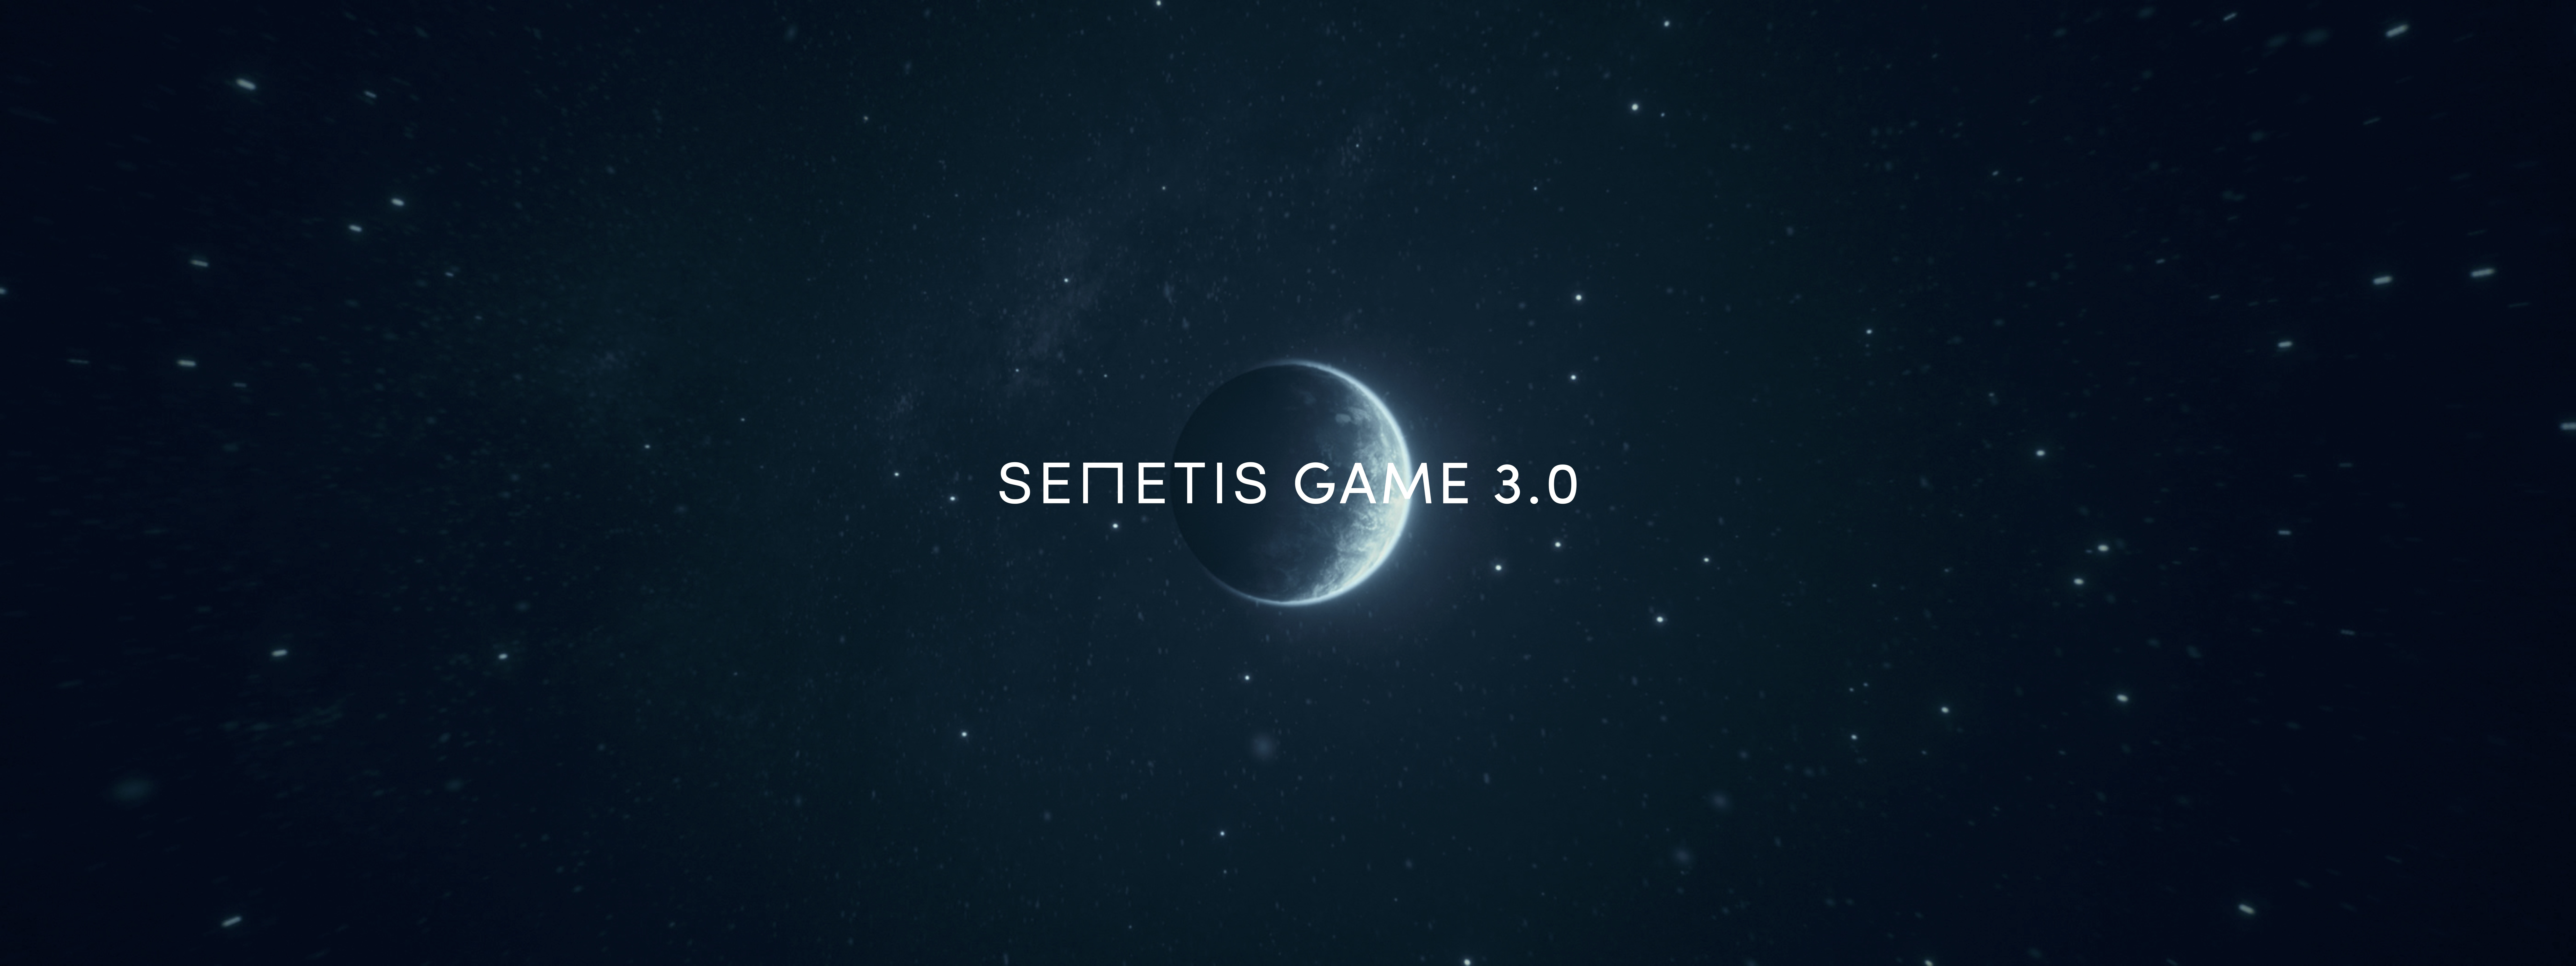 semetis game 3.0